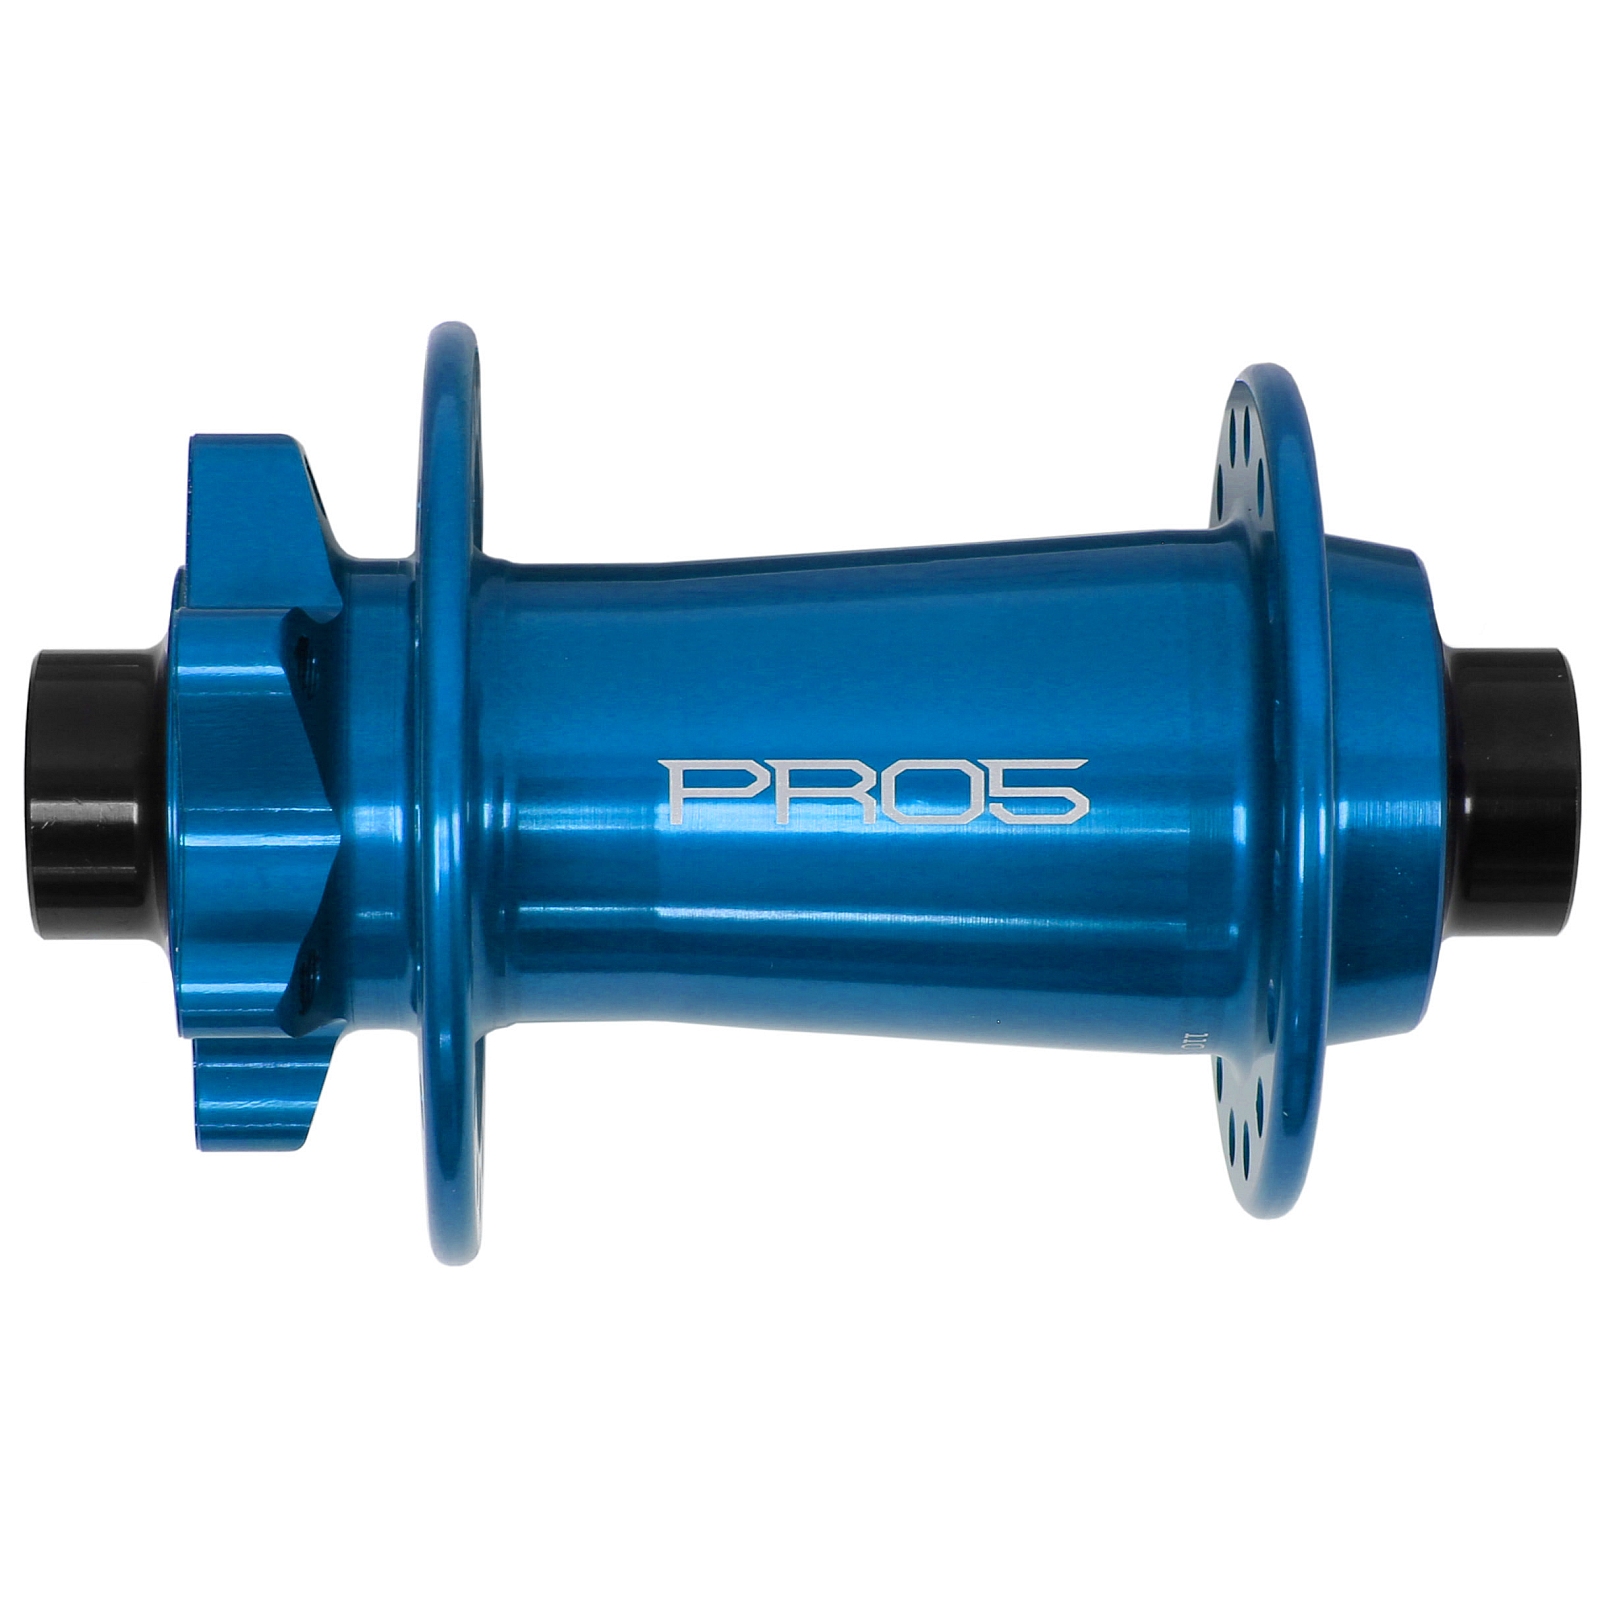 Productfoto van Hope Pro 5 Voorwielnaaf - 6-Bolt - 15x110mm Boost - blauw